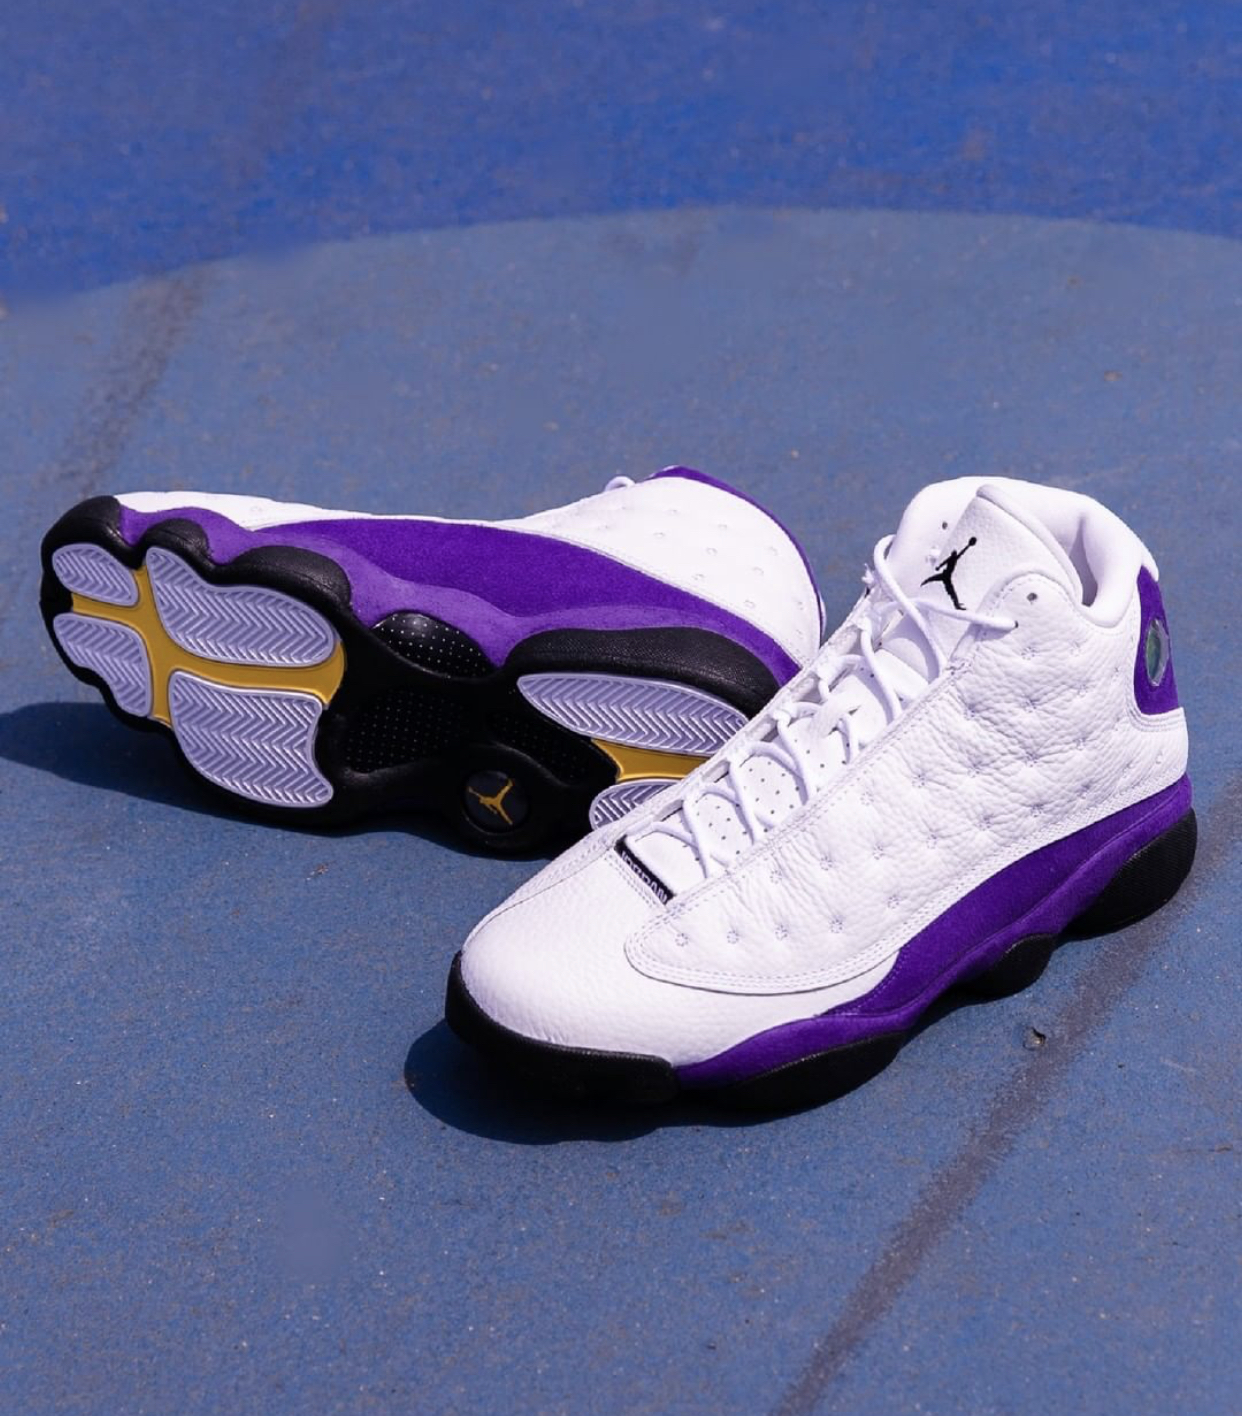 air jordan 13 court purple